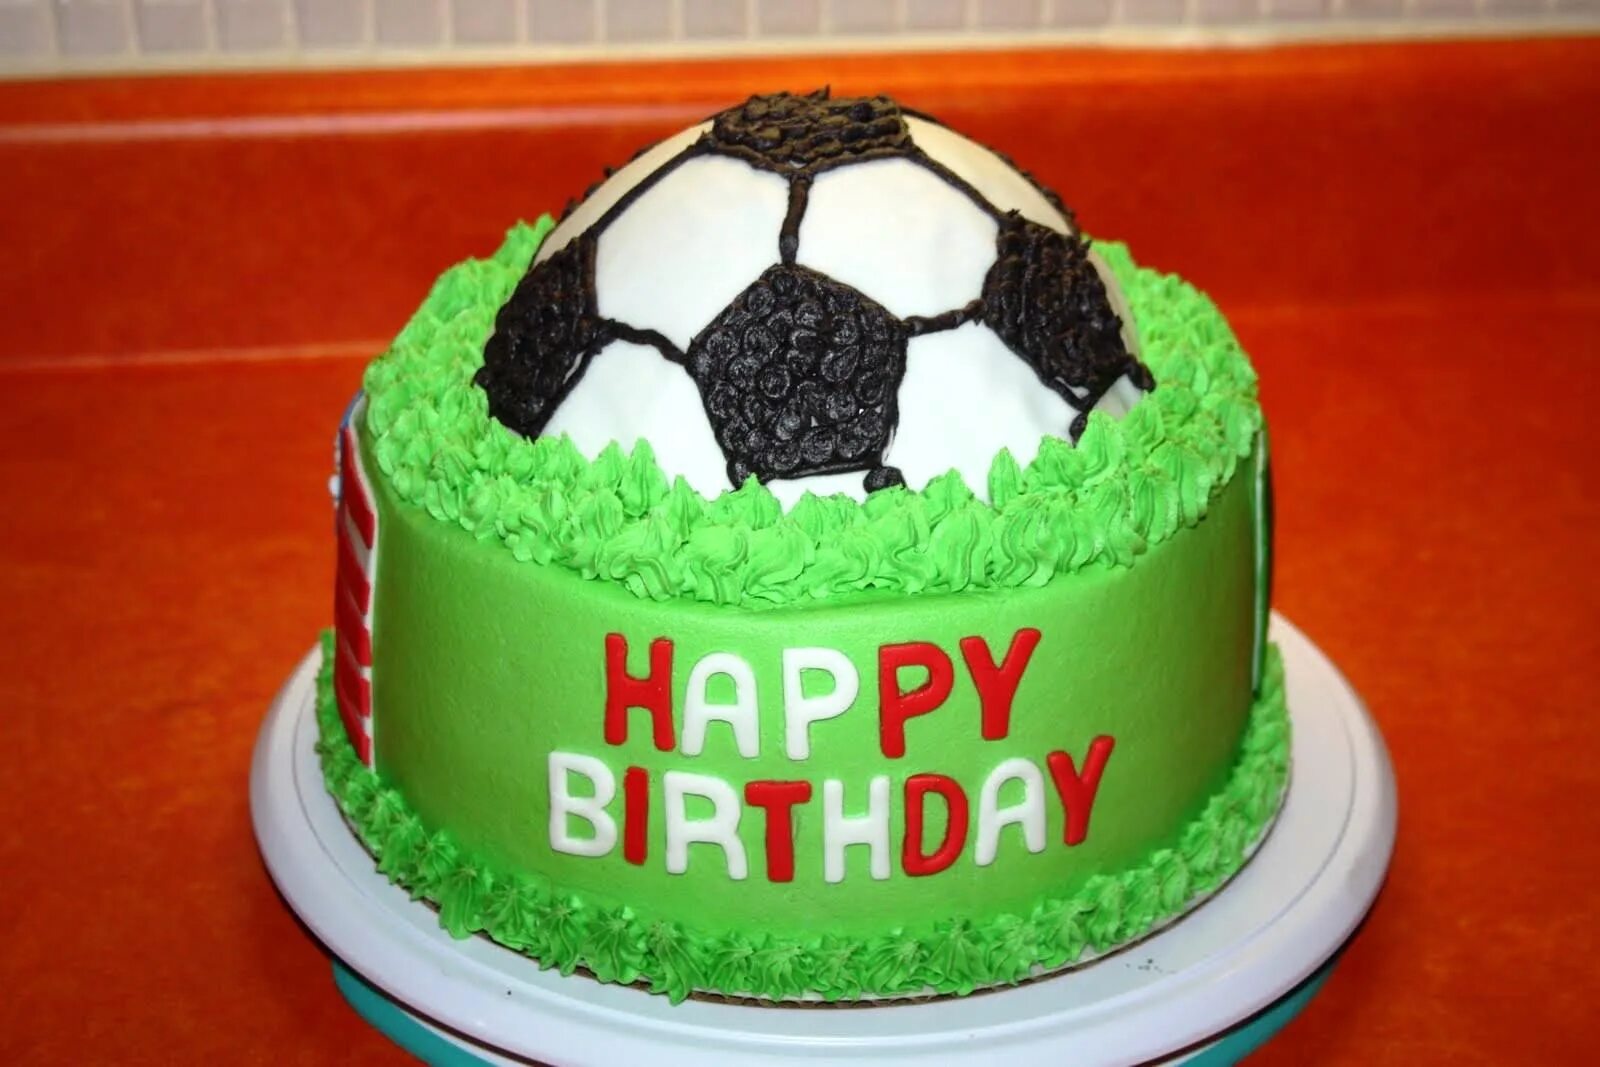 С днем рождения родителям футболиста. Торт для мальчика. Торт футбольный для мальчика 8 лет. Торты футбольные для мальчиков на день рождения. Торт футбольный для мальчика 9 лет.